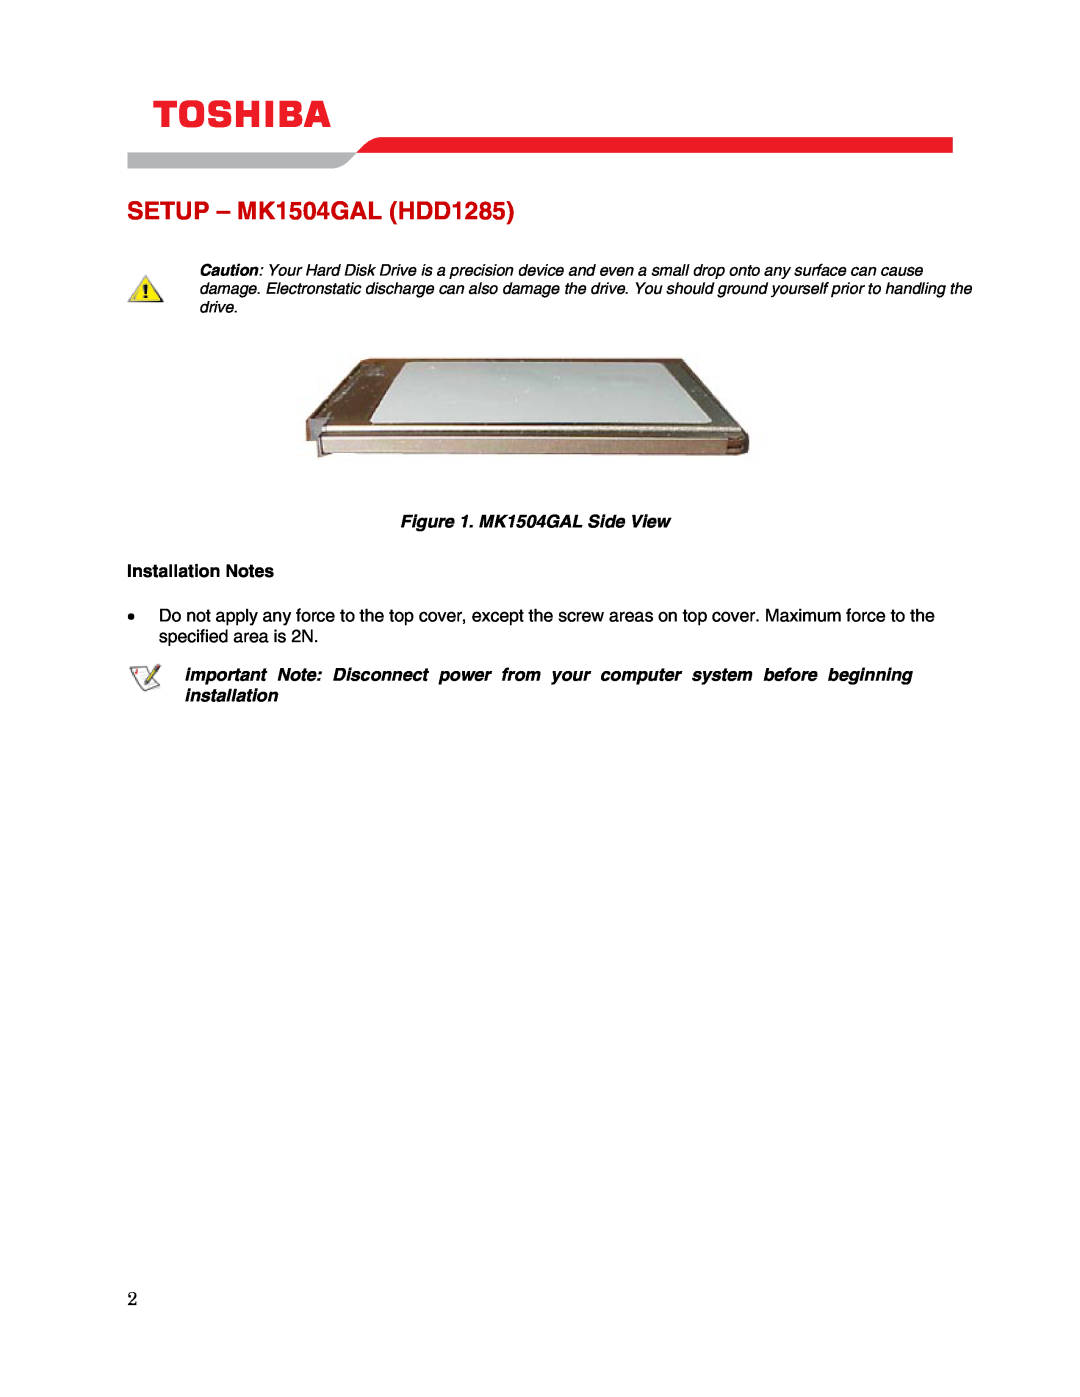 Toshiba user manual SETUP - MK1504GAL HDD1285, MK1504GAL Side View, Installation Notes 